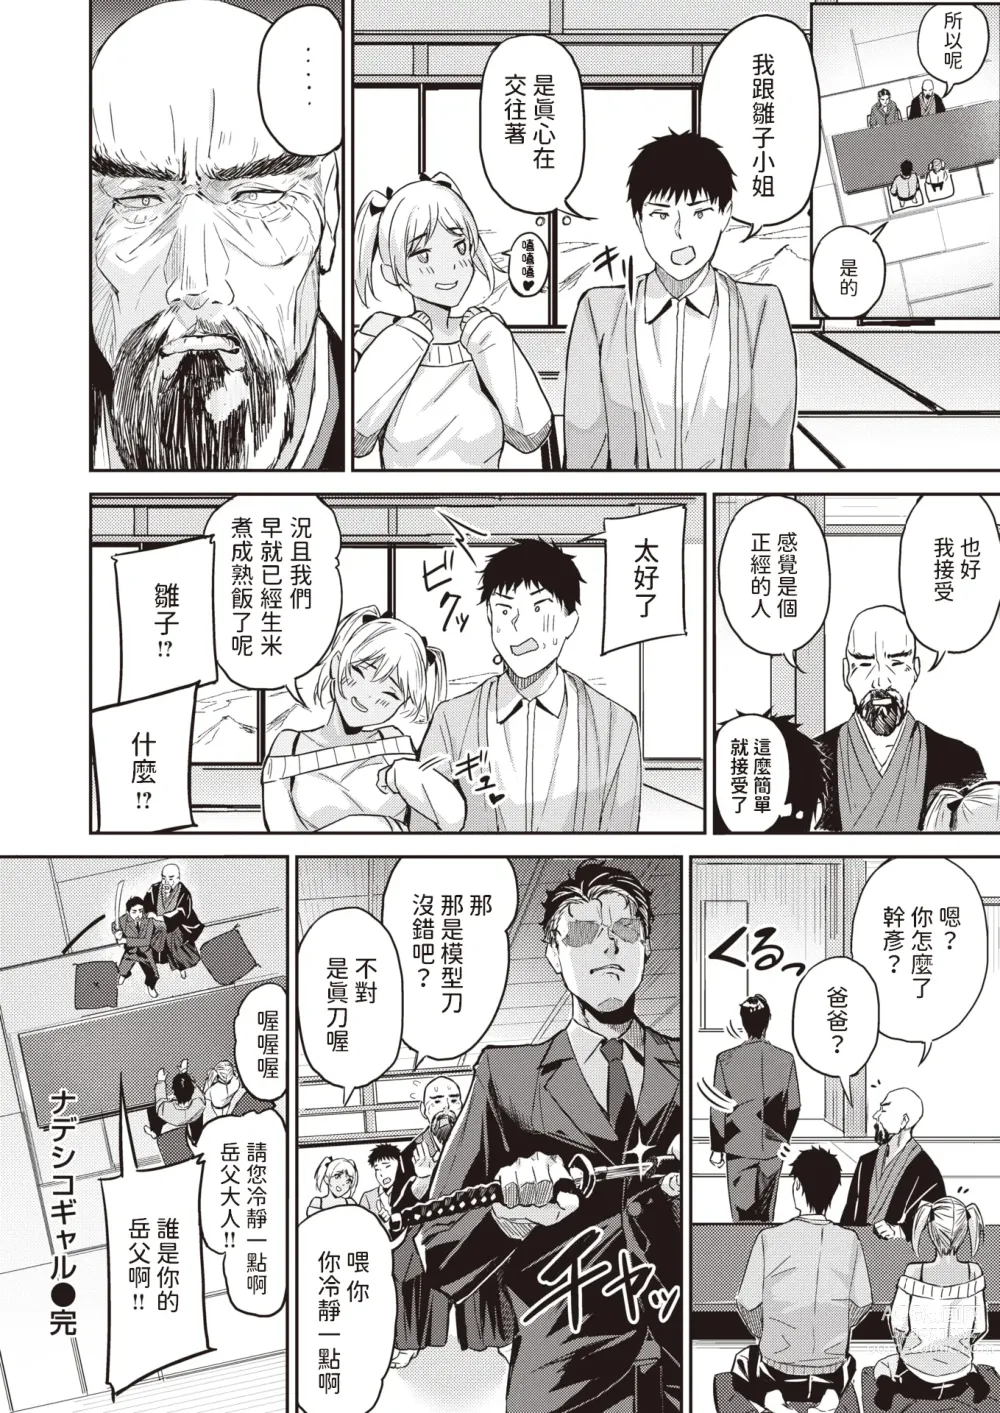 Page 22 of manga Nadeshiko Gal